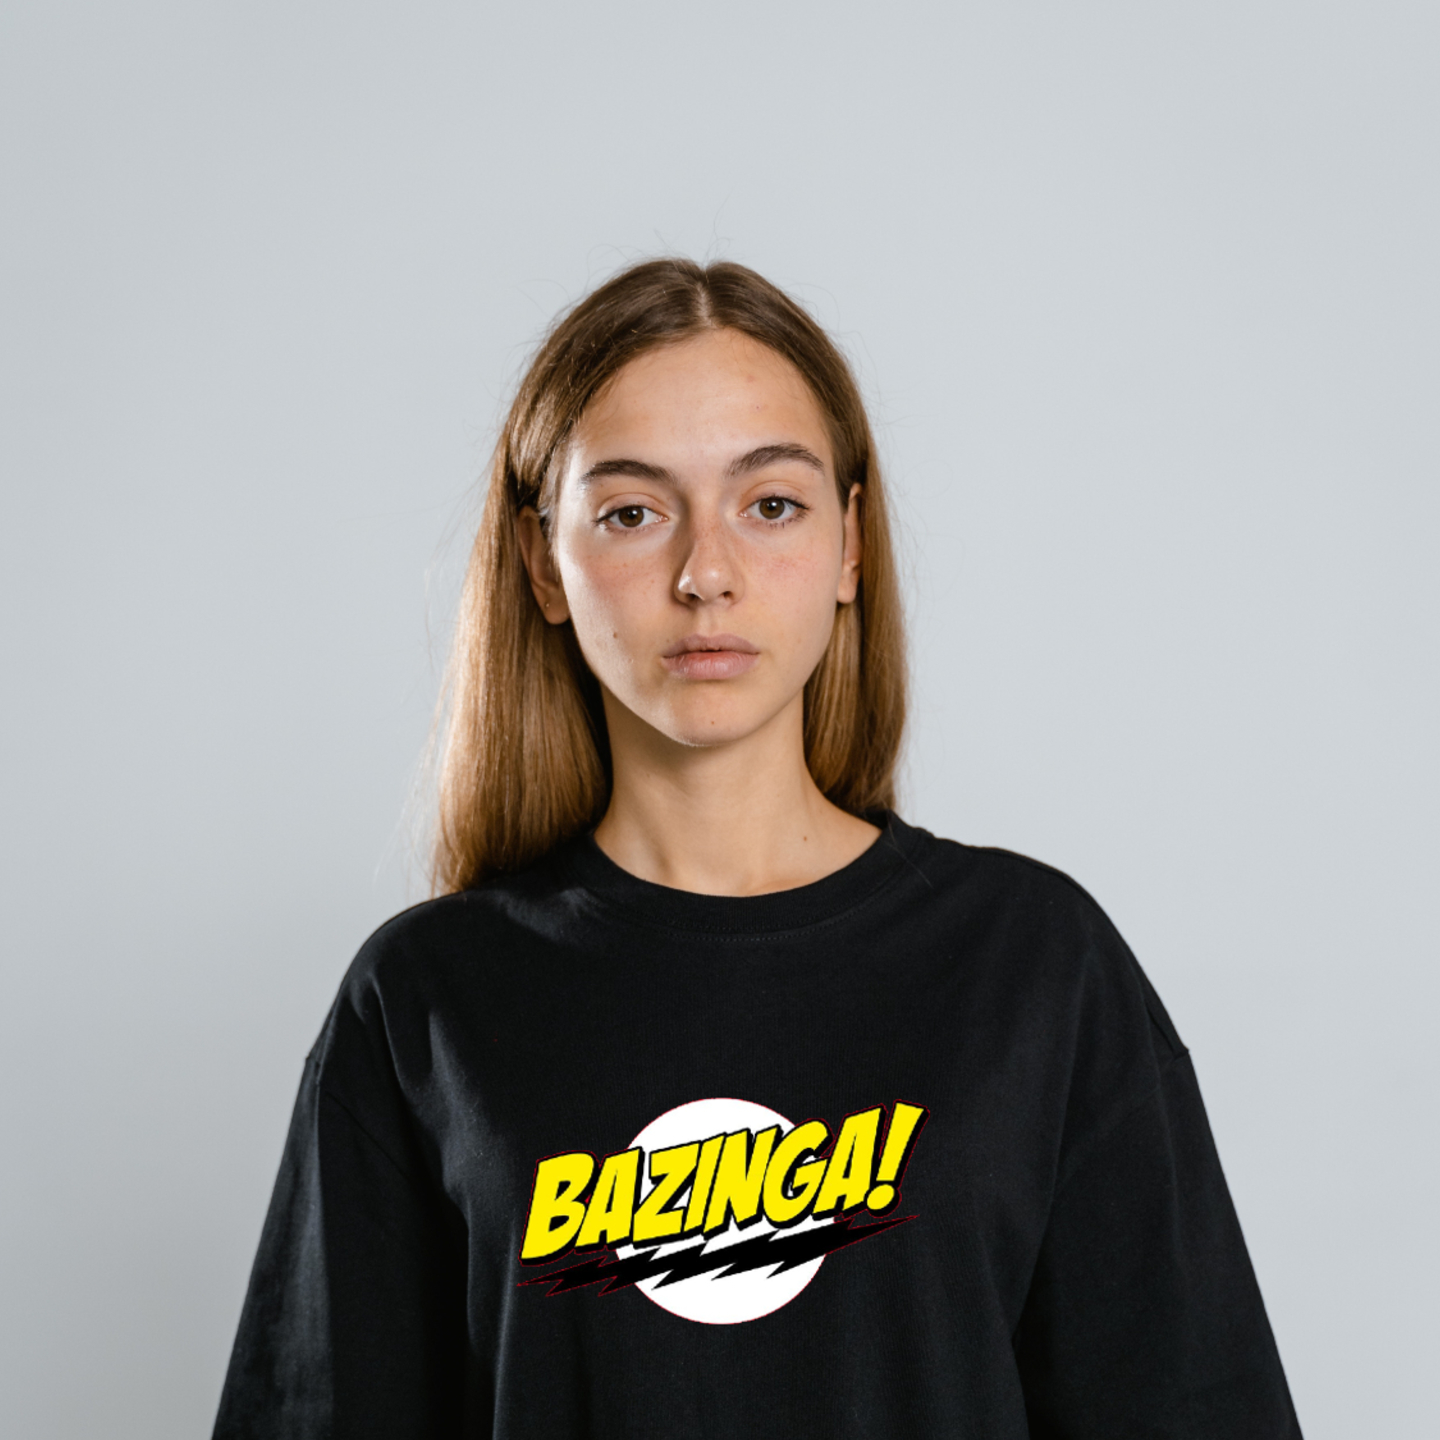 Bazinga T-Shirt